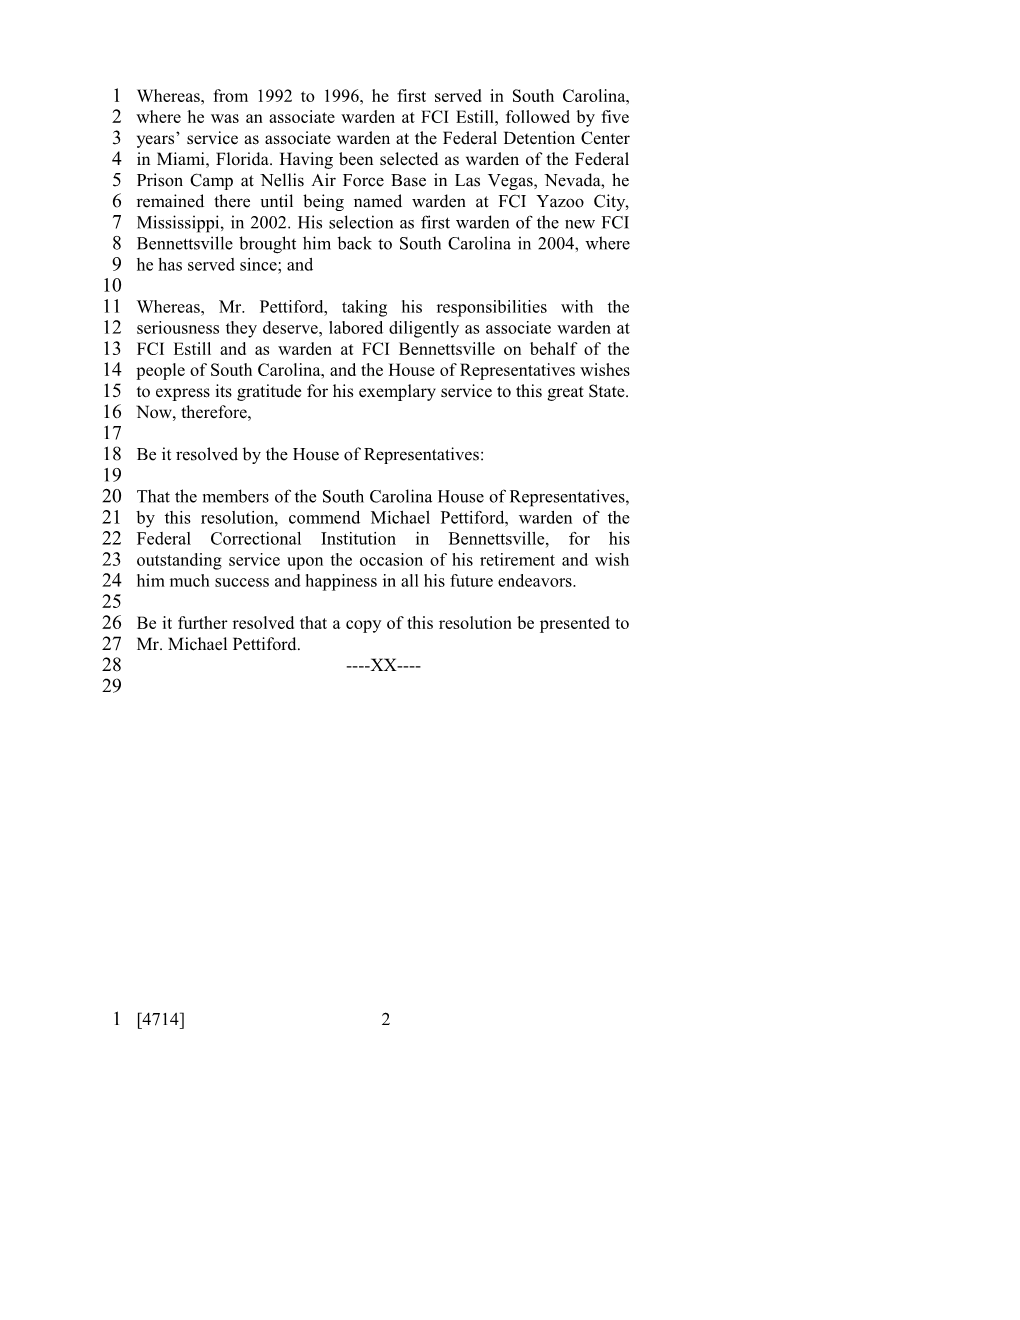 2007-2008 Bill 4714: Michael Pettiford - South Carolina Legislature Online